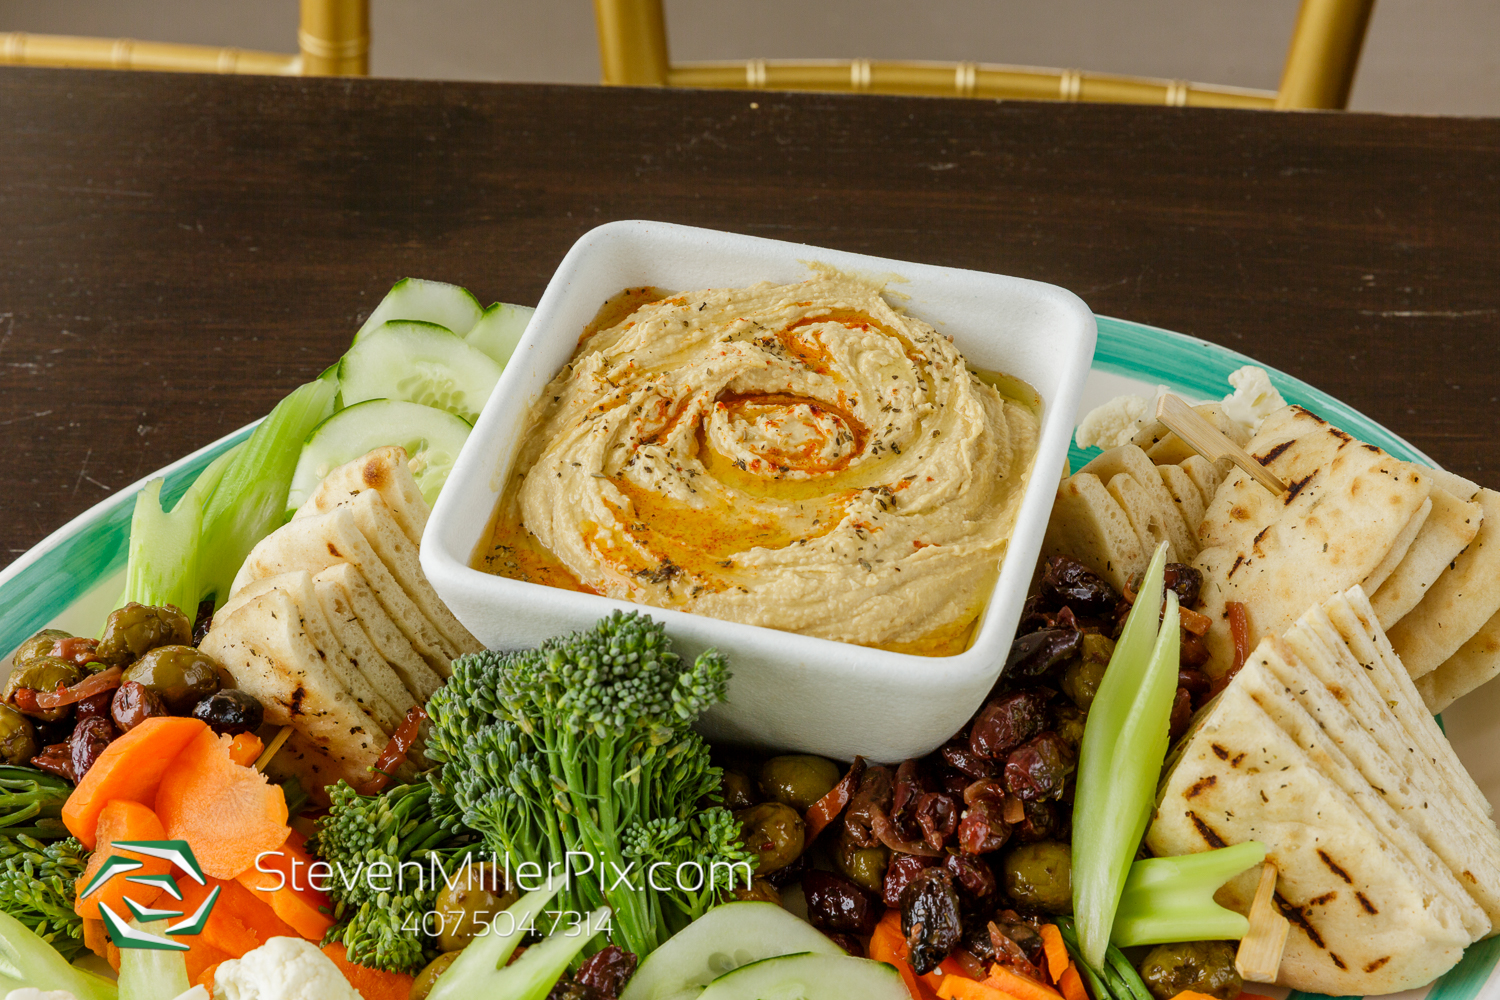 orlando catering - Roasted Garlic Hummus 